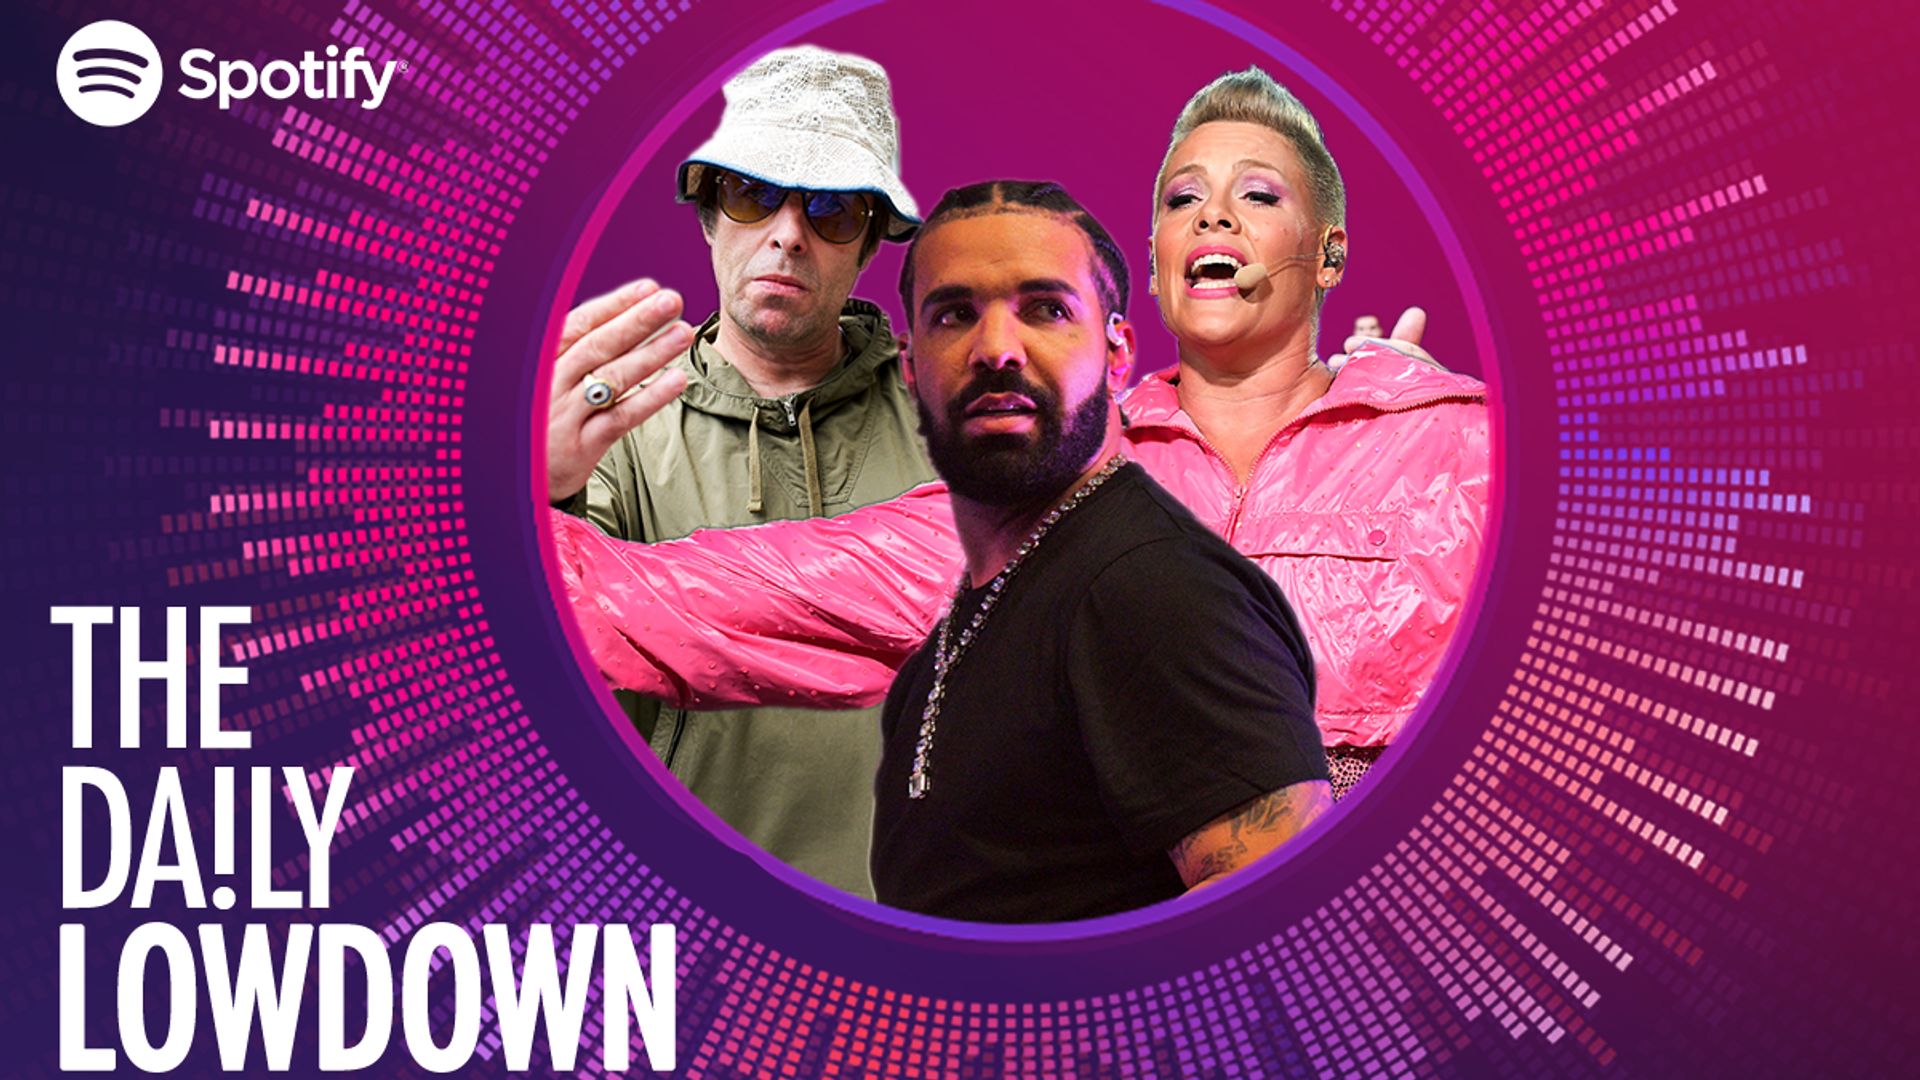 The Daily Lowdown: Drake hits another chart milestone thanks to new album